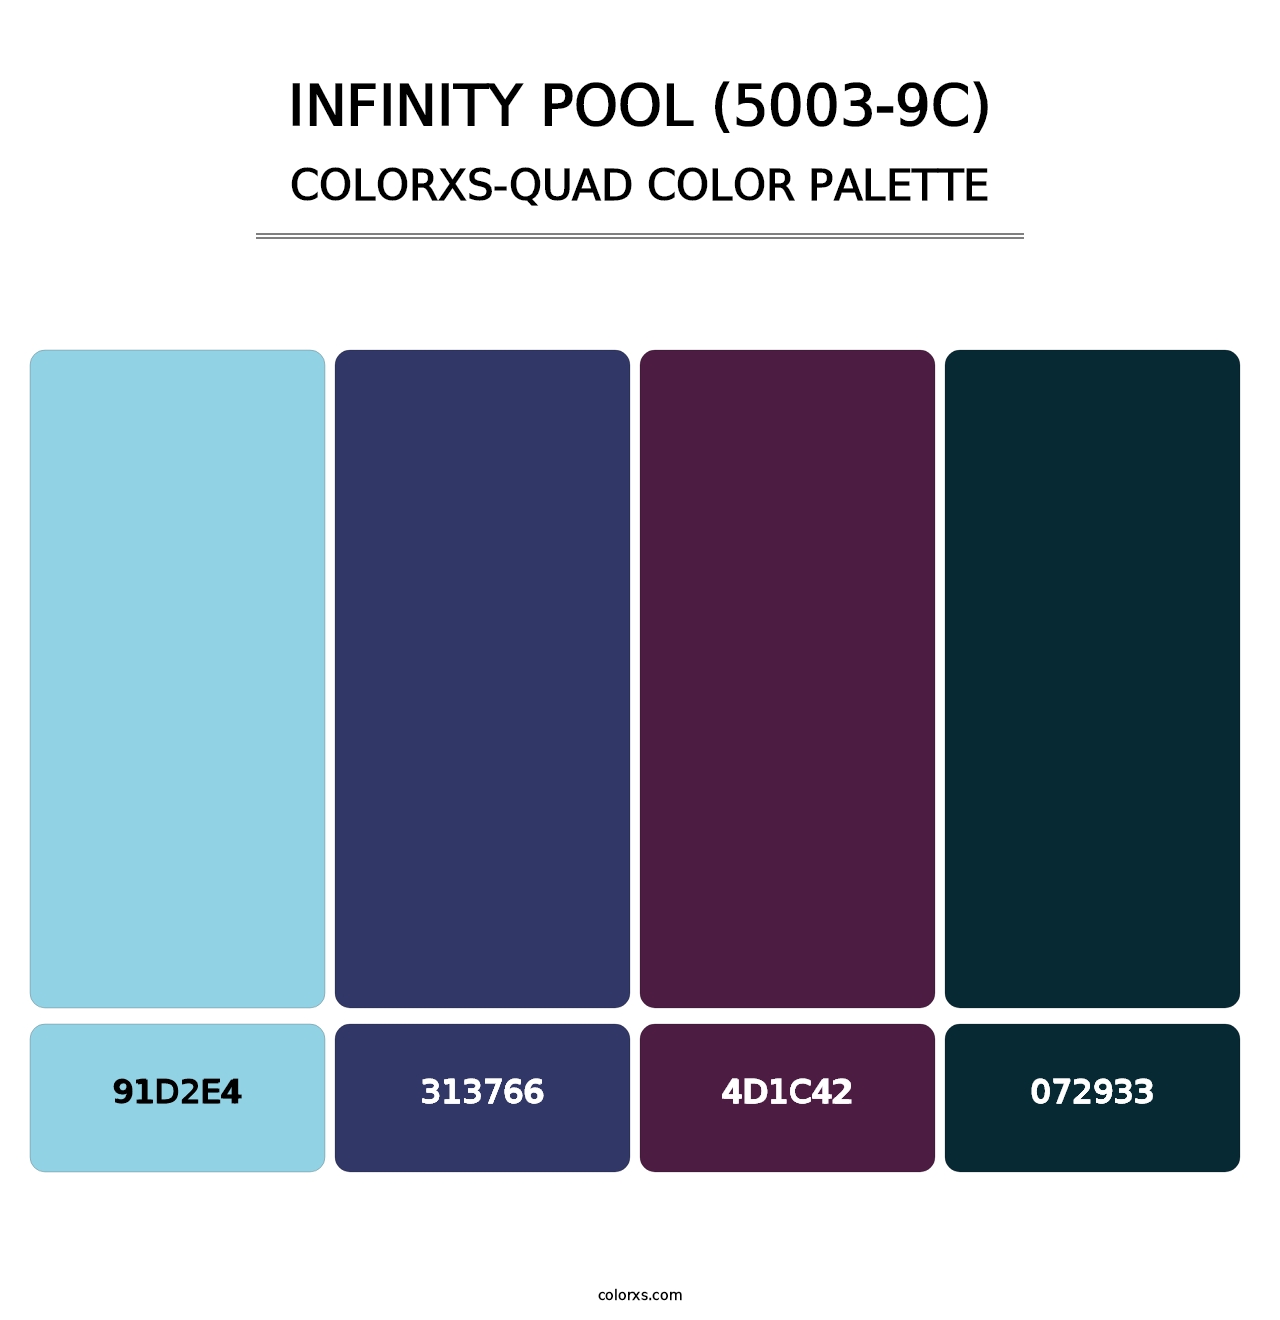 Infinity Pool (5003-9C) - Colorxs Quad Palette